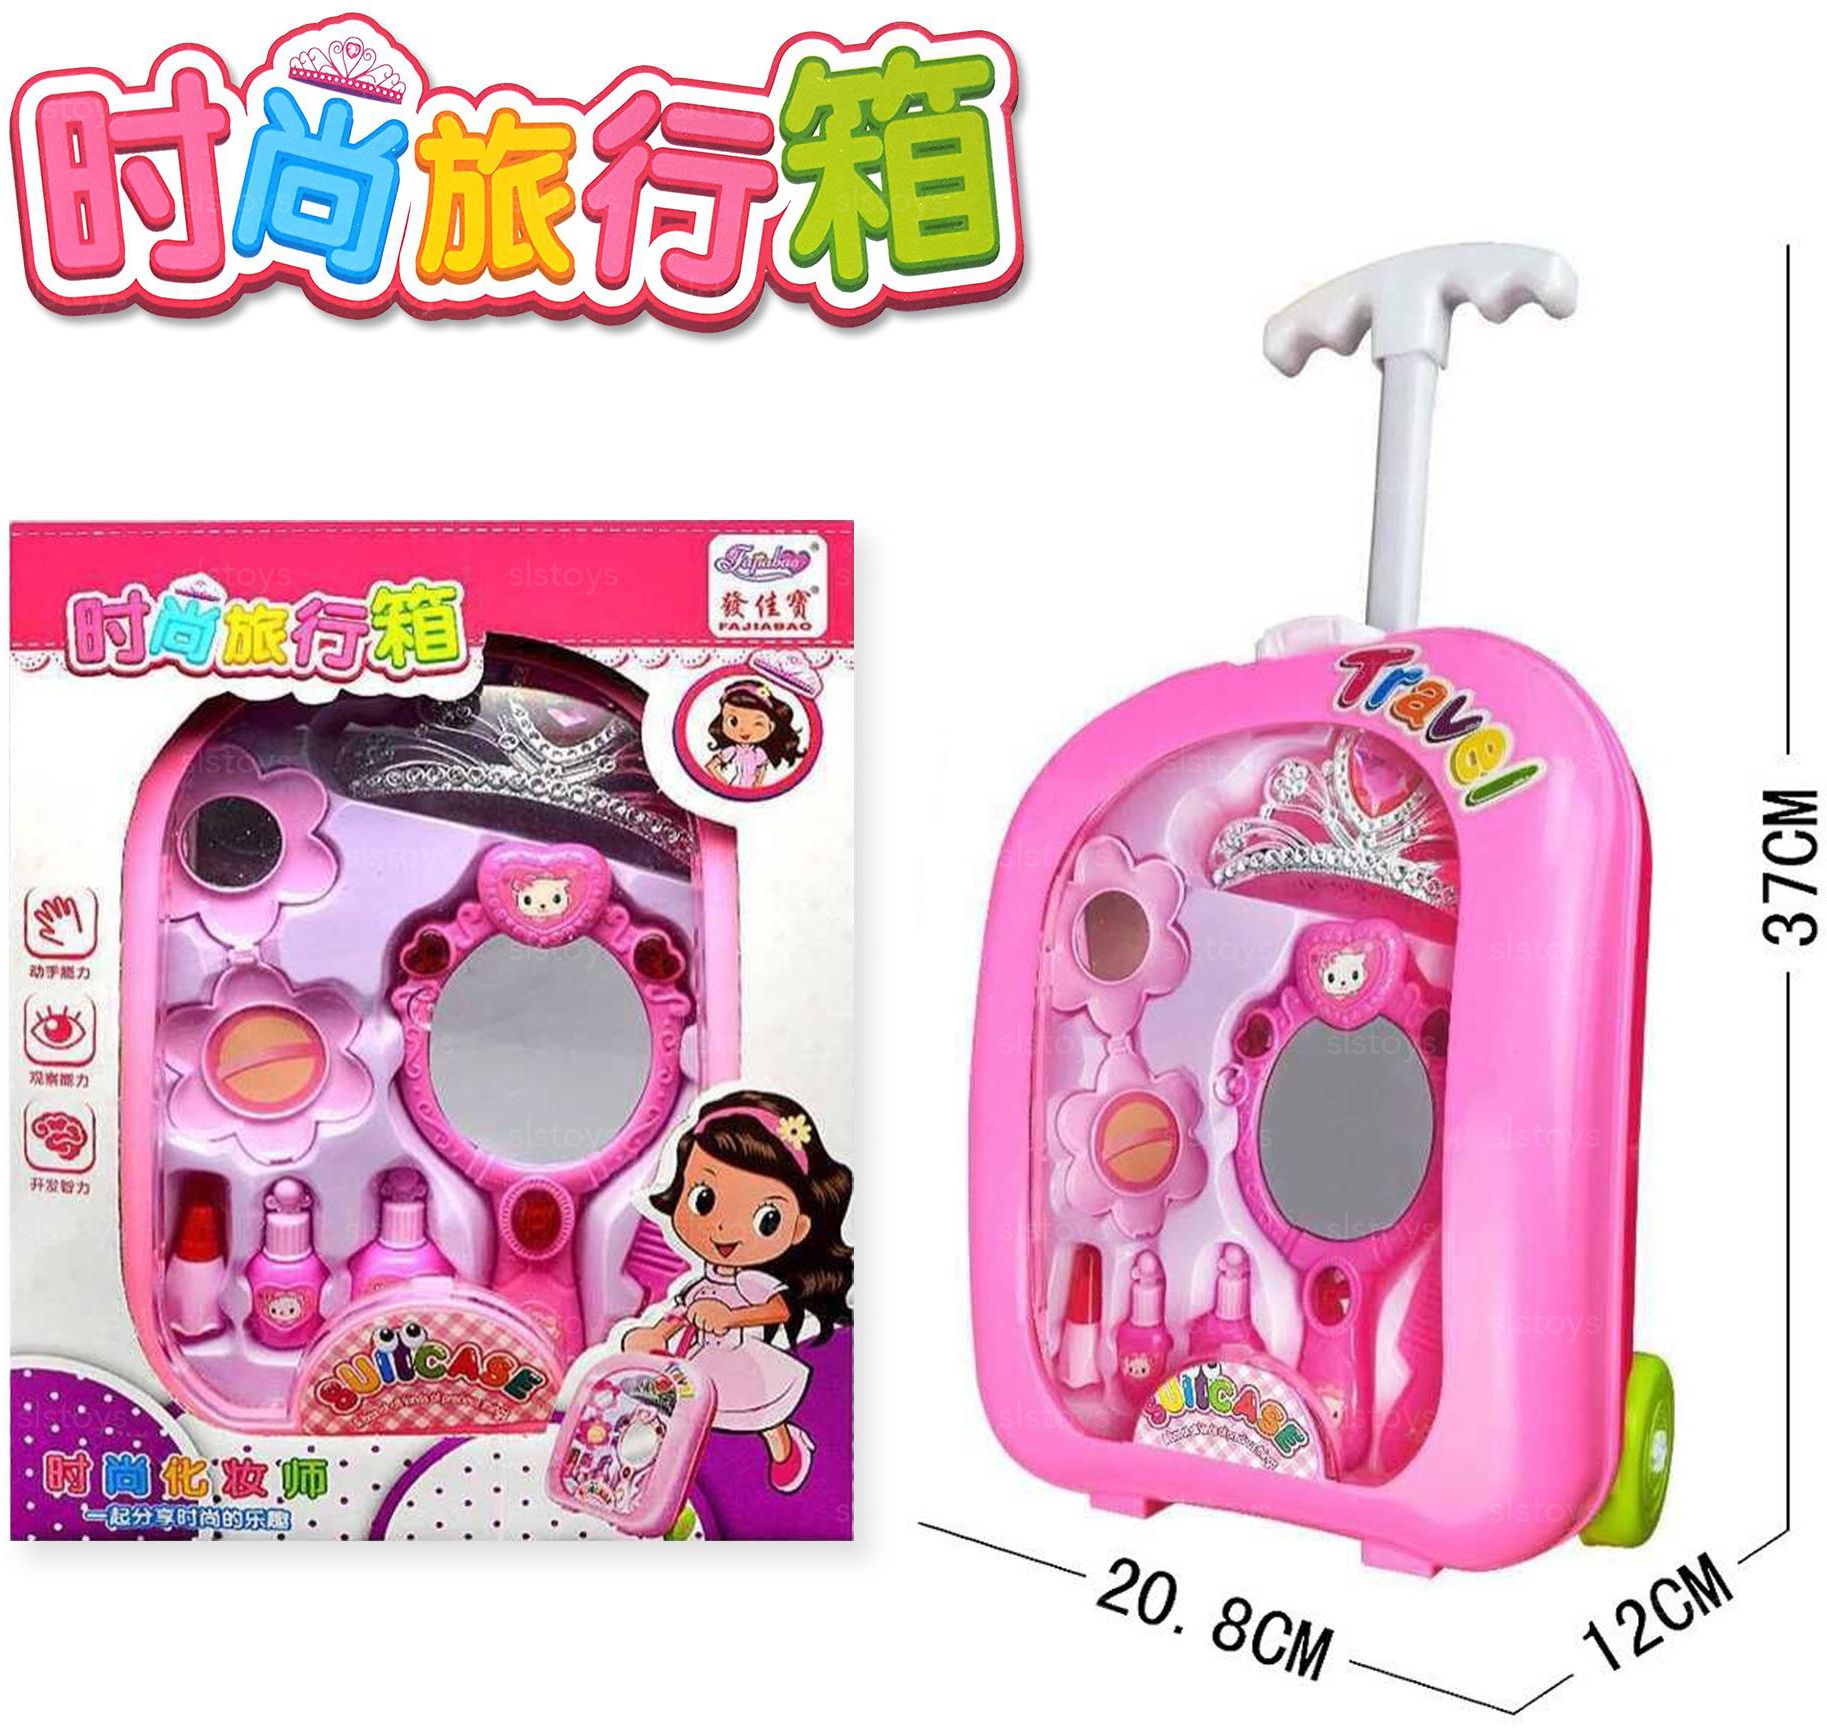 Slstoys My Princess Makeup Set Girls Toys Pretend Play Cartoon Play Set  (Pink) price from eromman in Saudi Arabia - Yaoota!